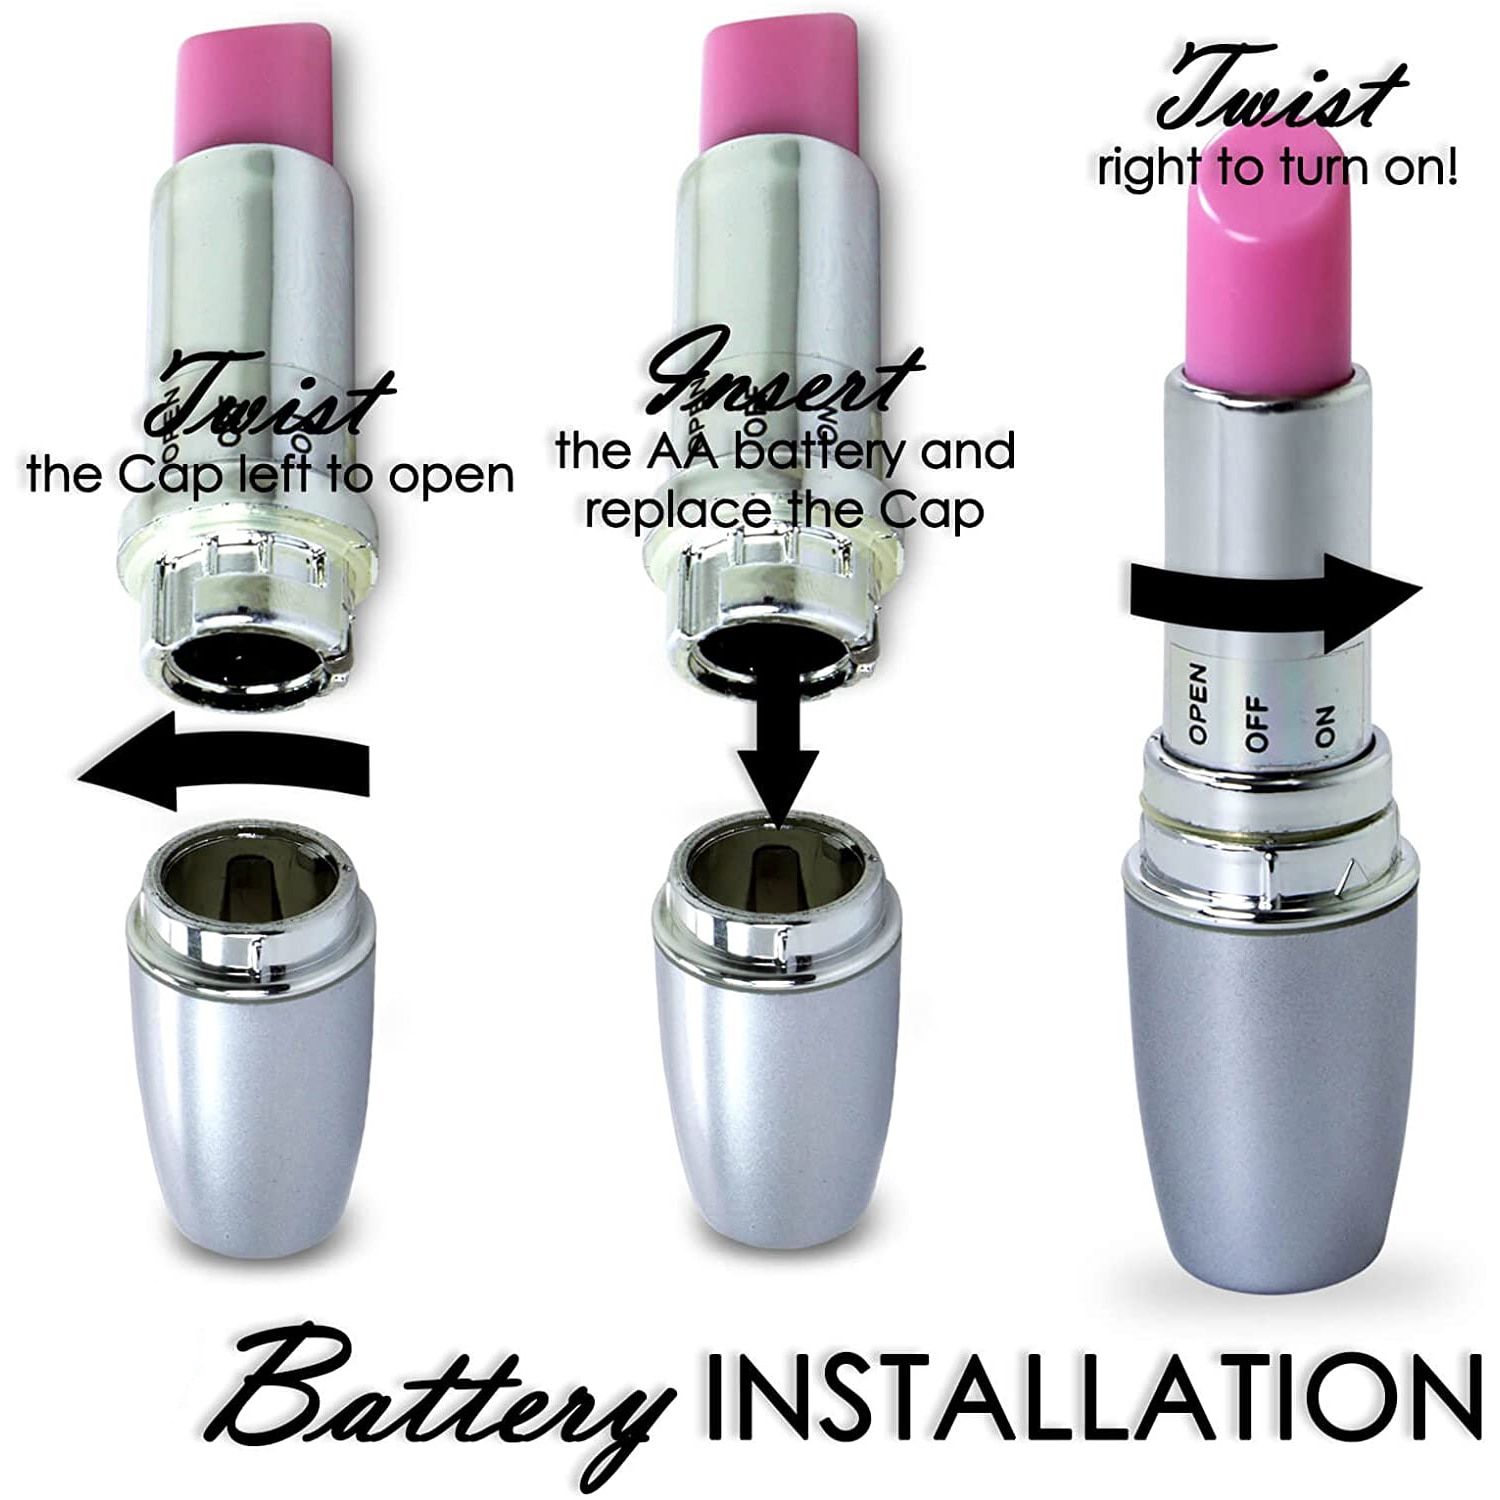 Lipsticks Vibrator Secret Bullet Vibrator Clitoris Stimulator G-spot Massage Sex Toys For Woman Masturbator Quiet Product adult